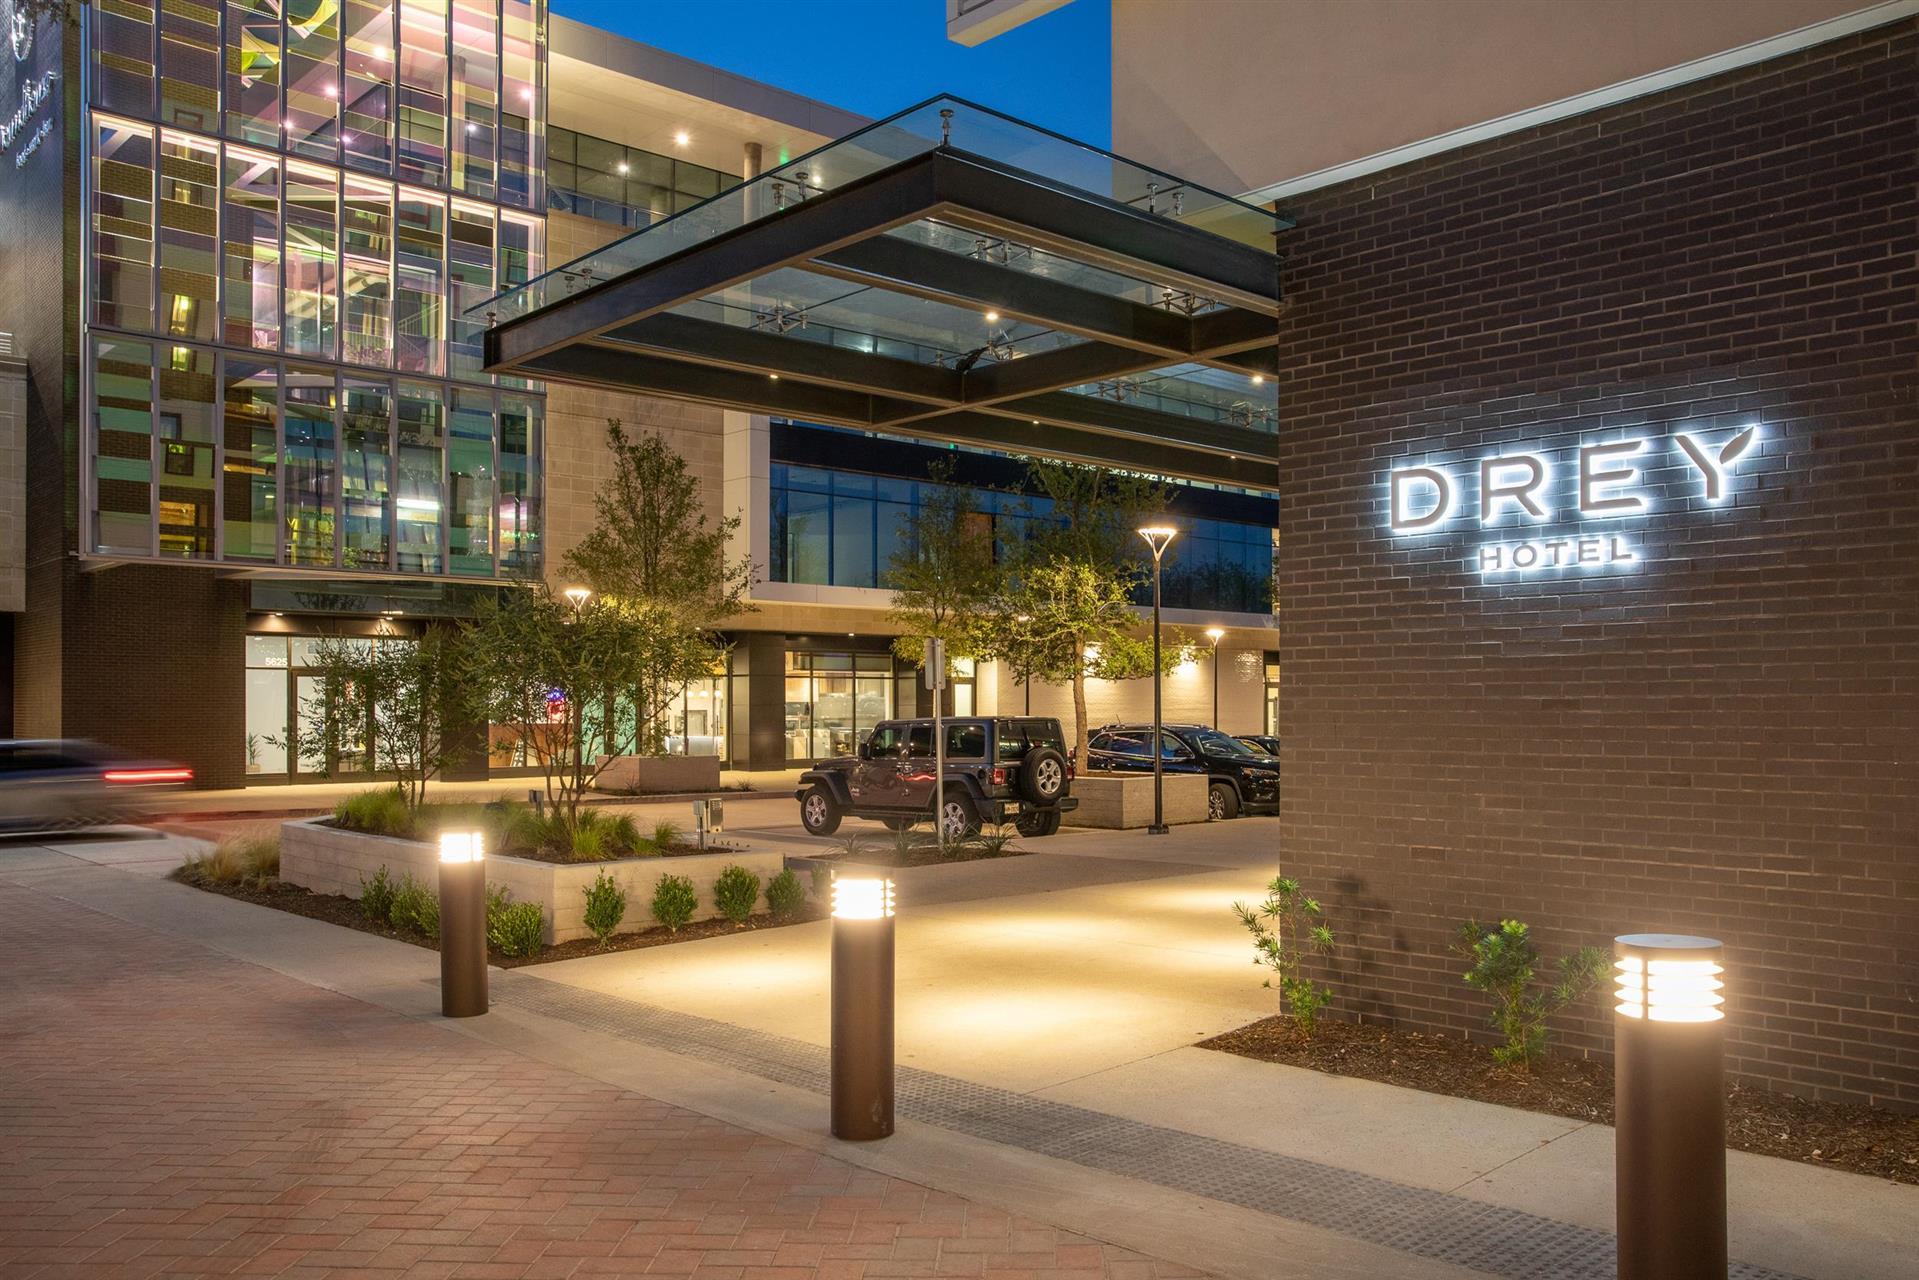 Drey Hotel in Dallas, TX